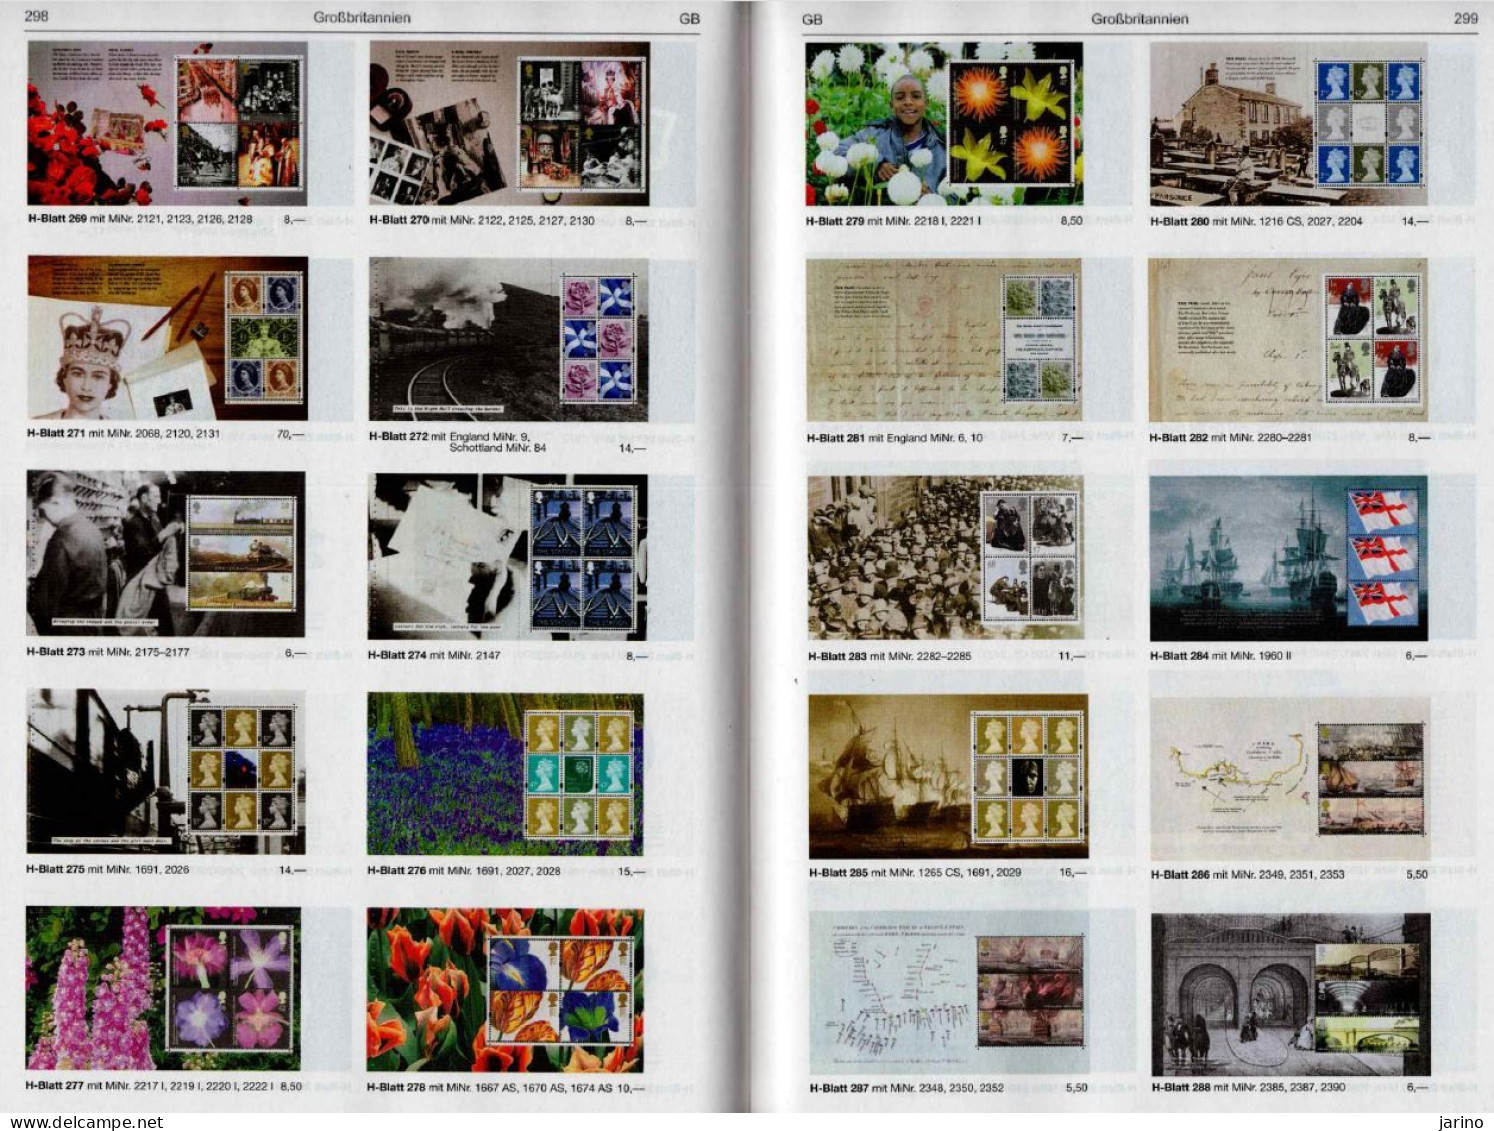 Grossbritannien Michel catalogue 2022, 570 pages on CD, UK, Nordirland, Schottland, Wales, Irland